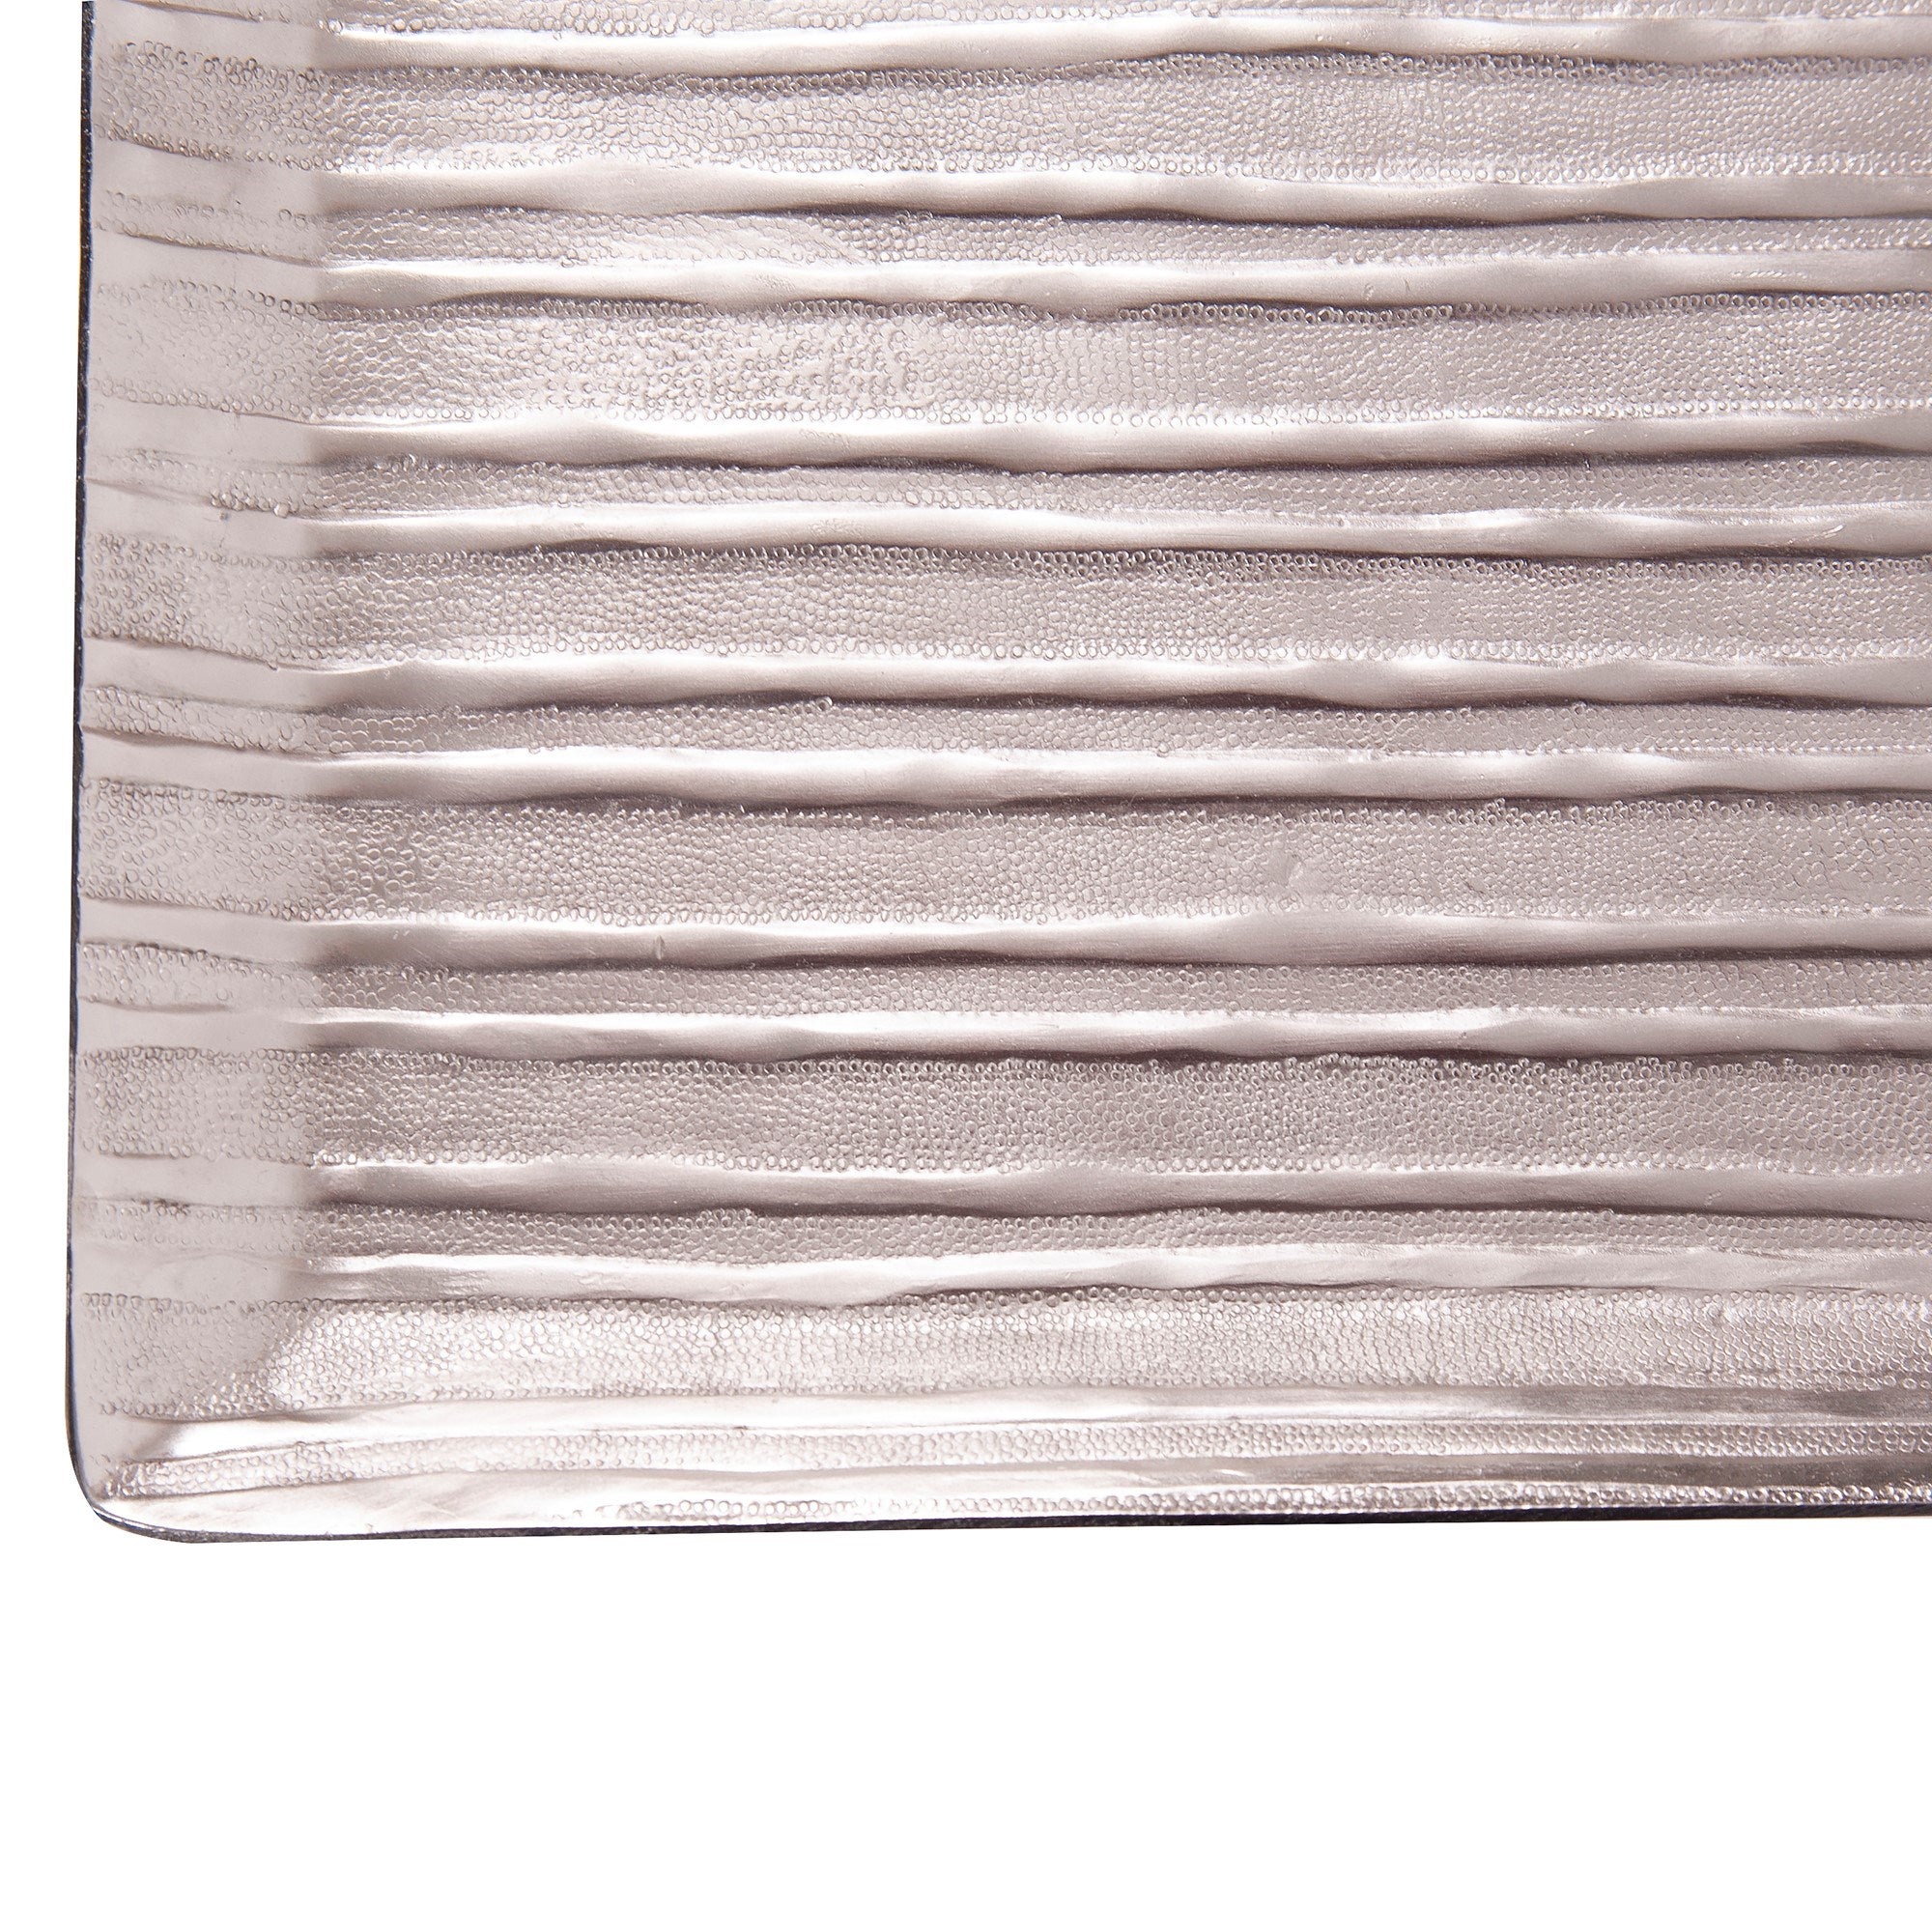 Chiseled Silver Tray, Large